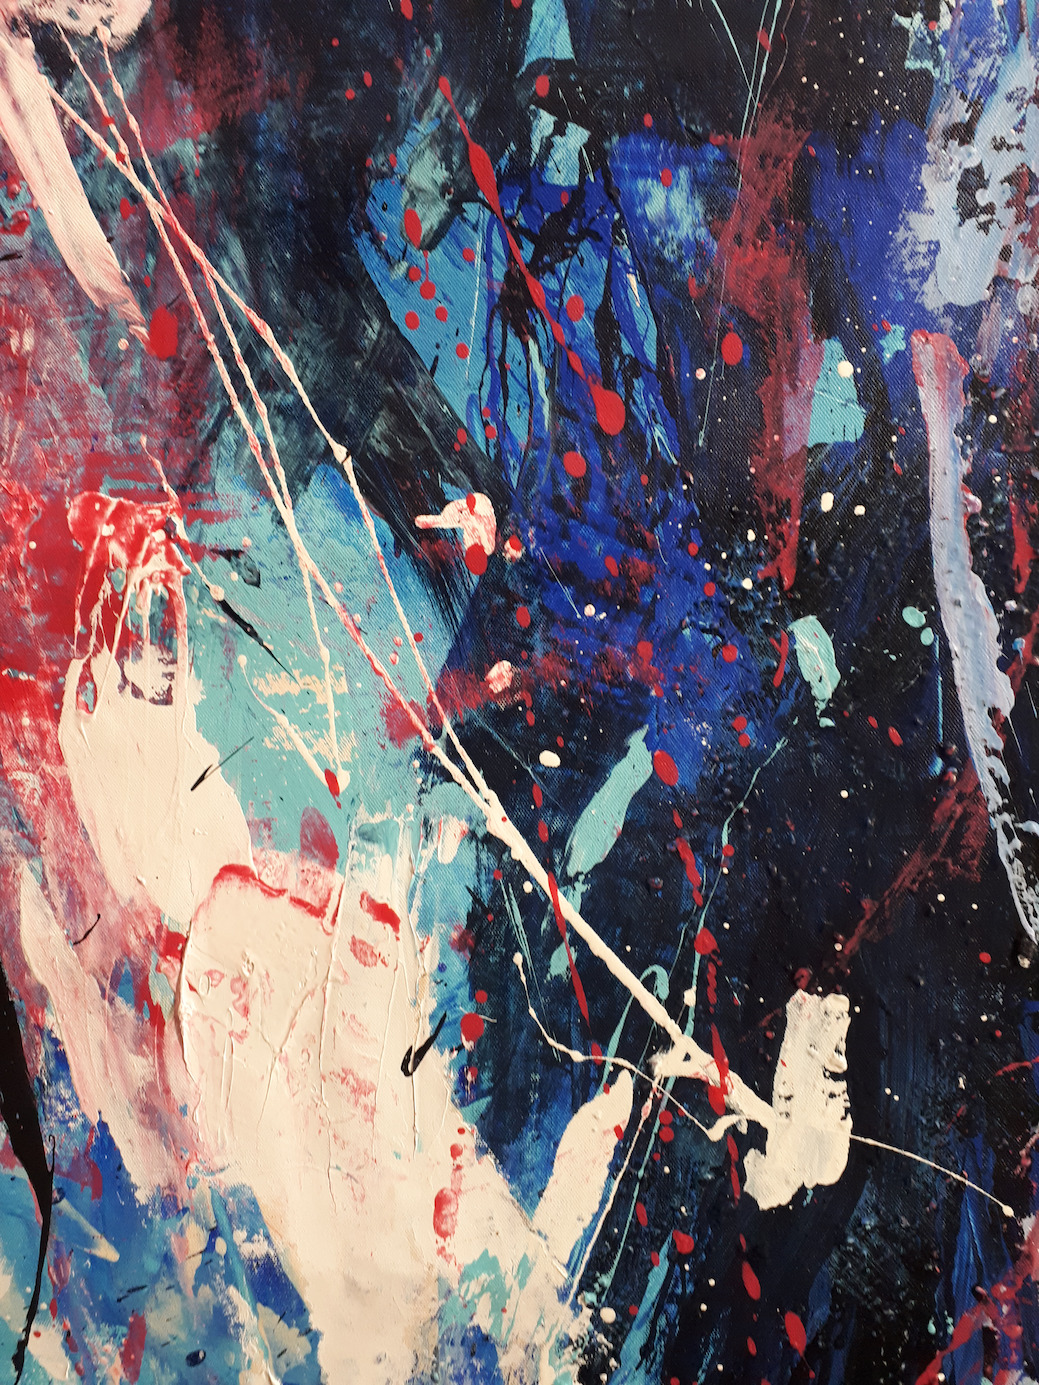 Close Up Detail 2 Of Acrylic Painting "Turmoil" By Judith Dalozzo